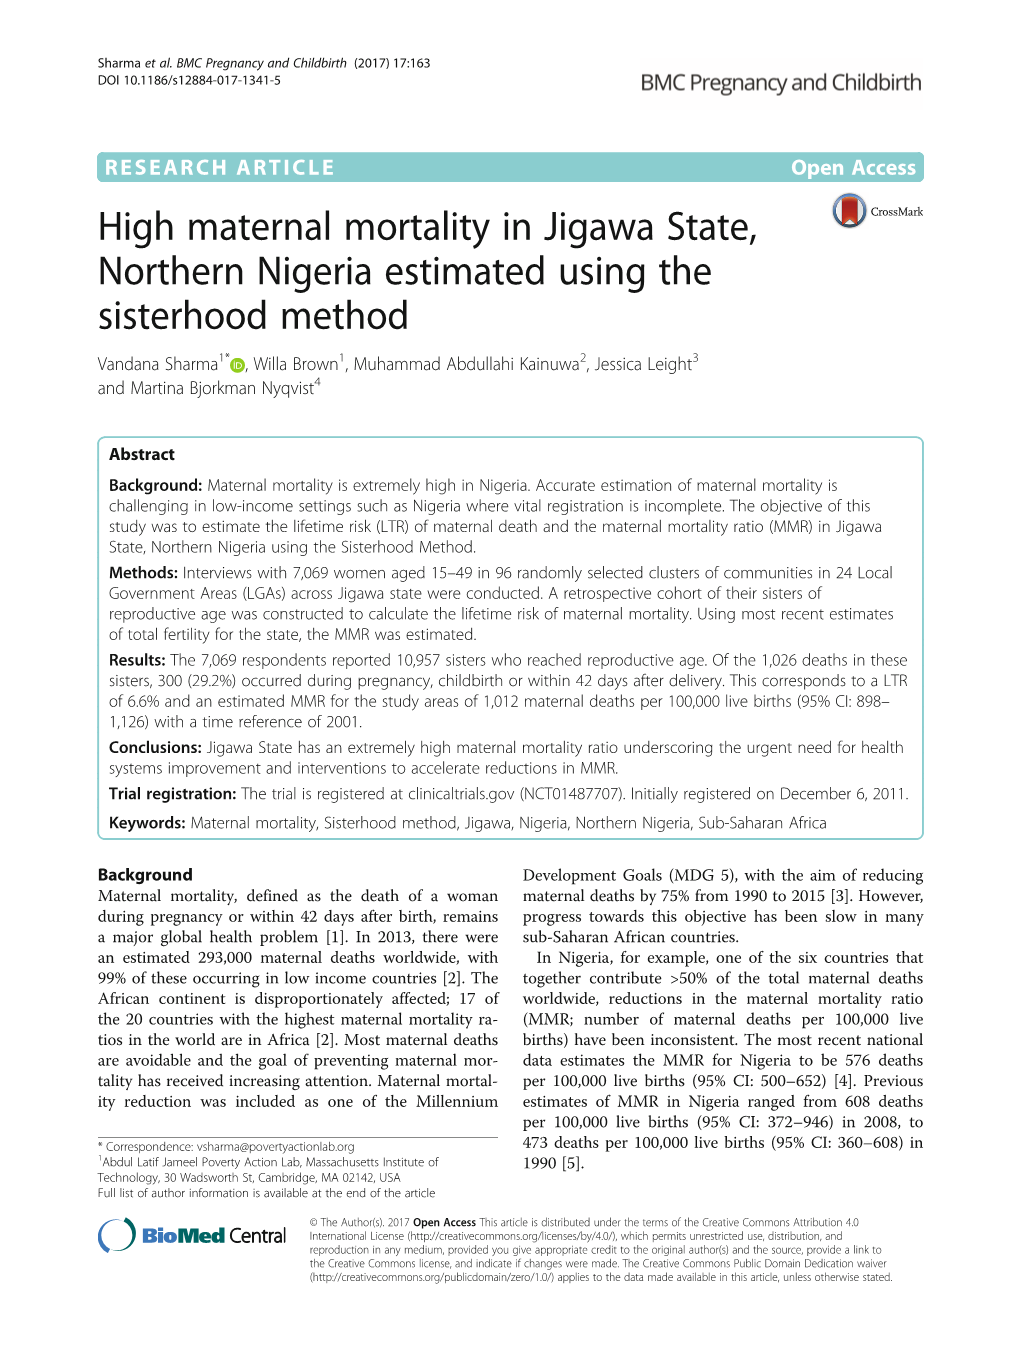 High Maternal Mortality in Jigawa State, Northern Nigeria Estimated